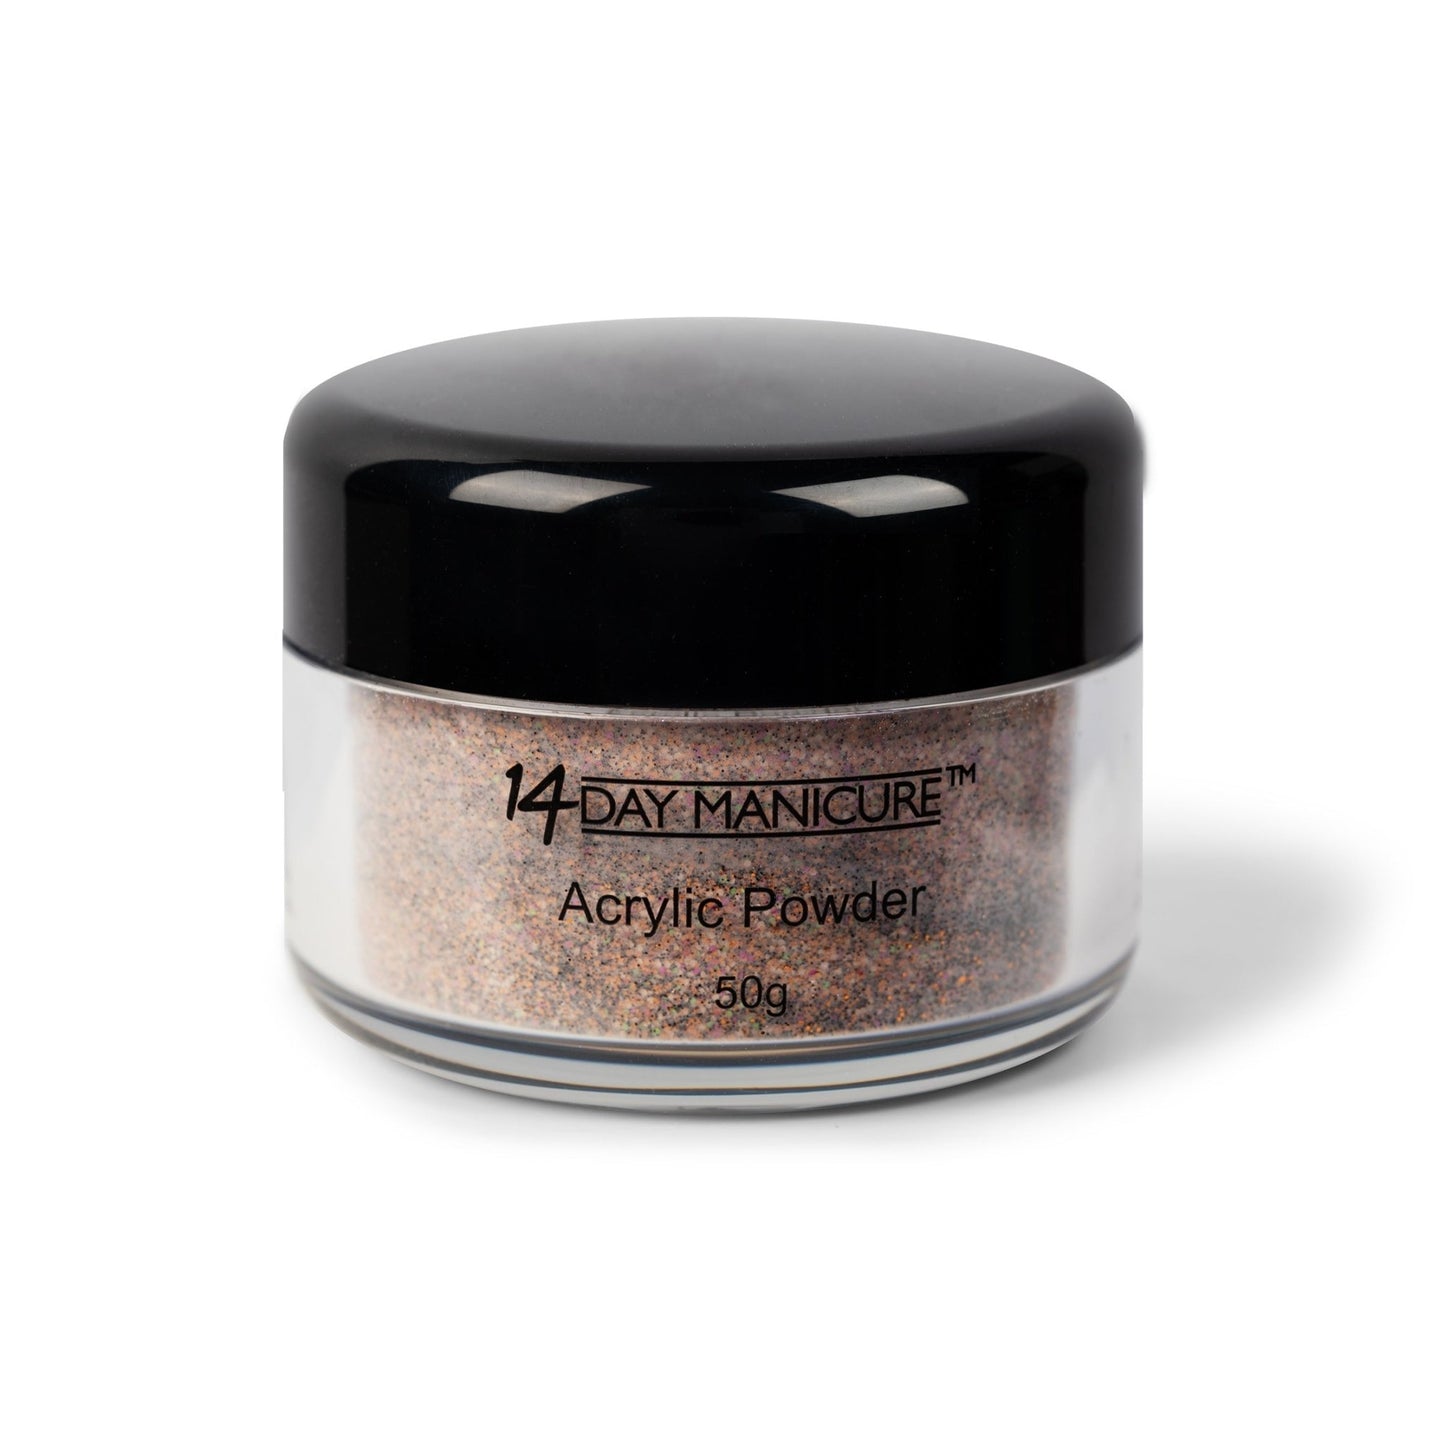 Acrylic Powder - Bronzed Goddess - 14 Day Manicure - 1